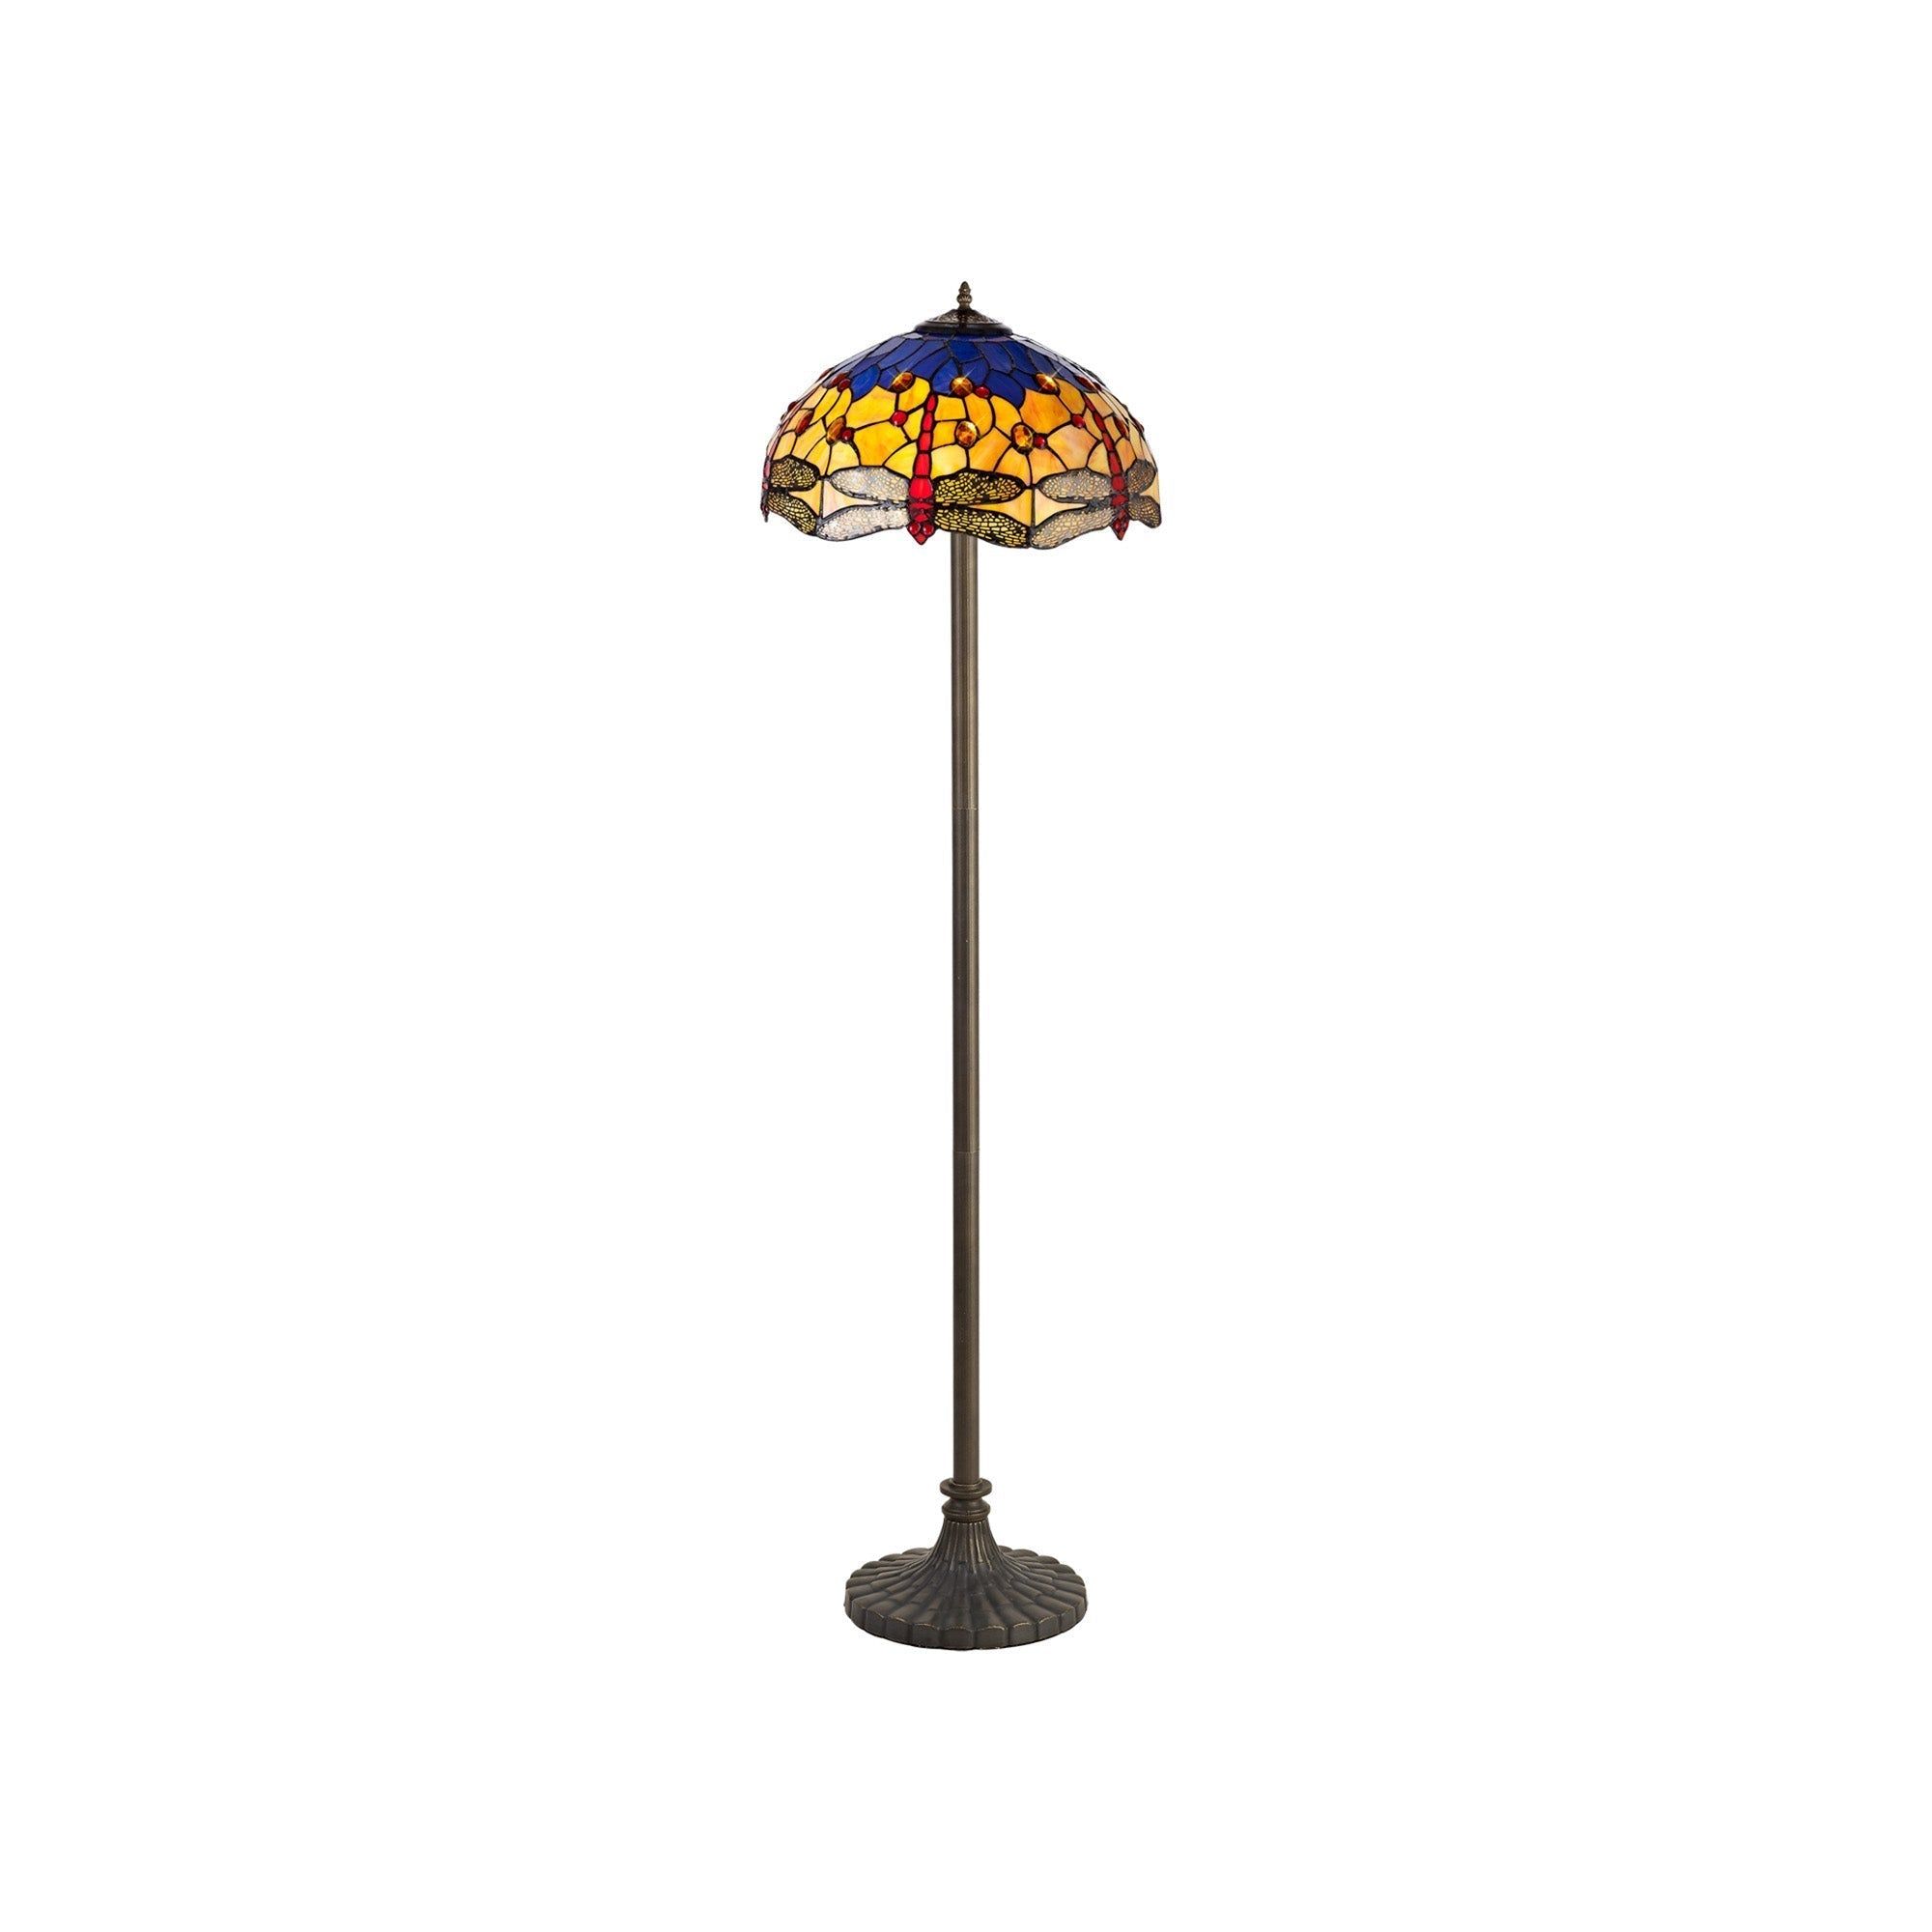 Nuflur 2 Light Stepped Design Floor Lamp E27 With 40cm Tiffany Shade, Antique Brass